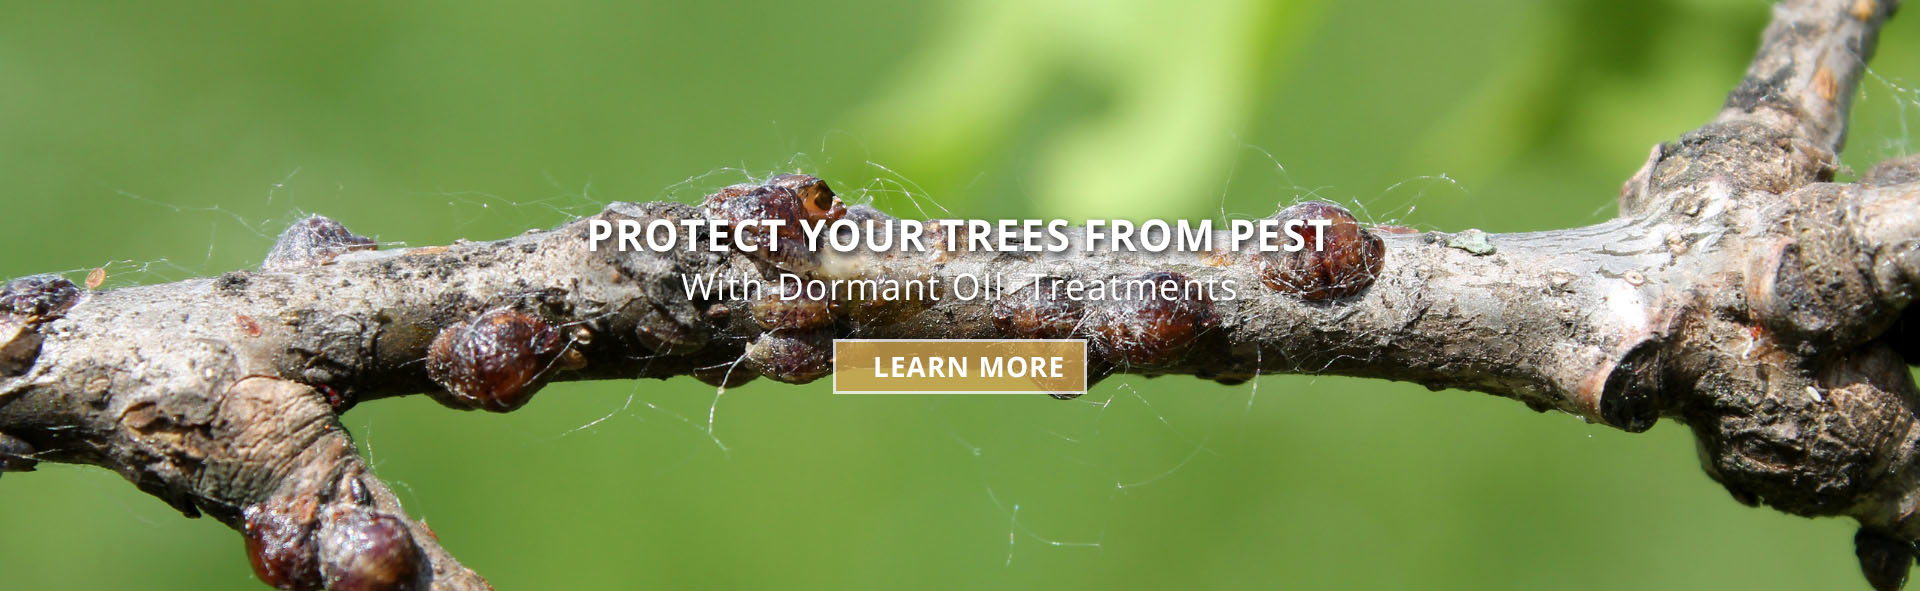 dormant oil treatment